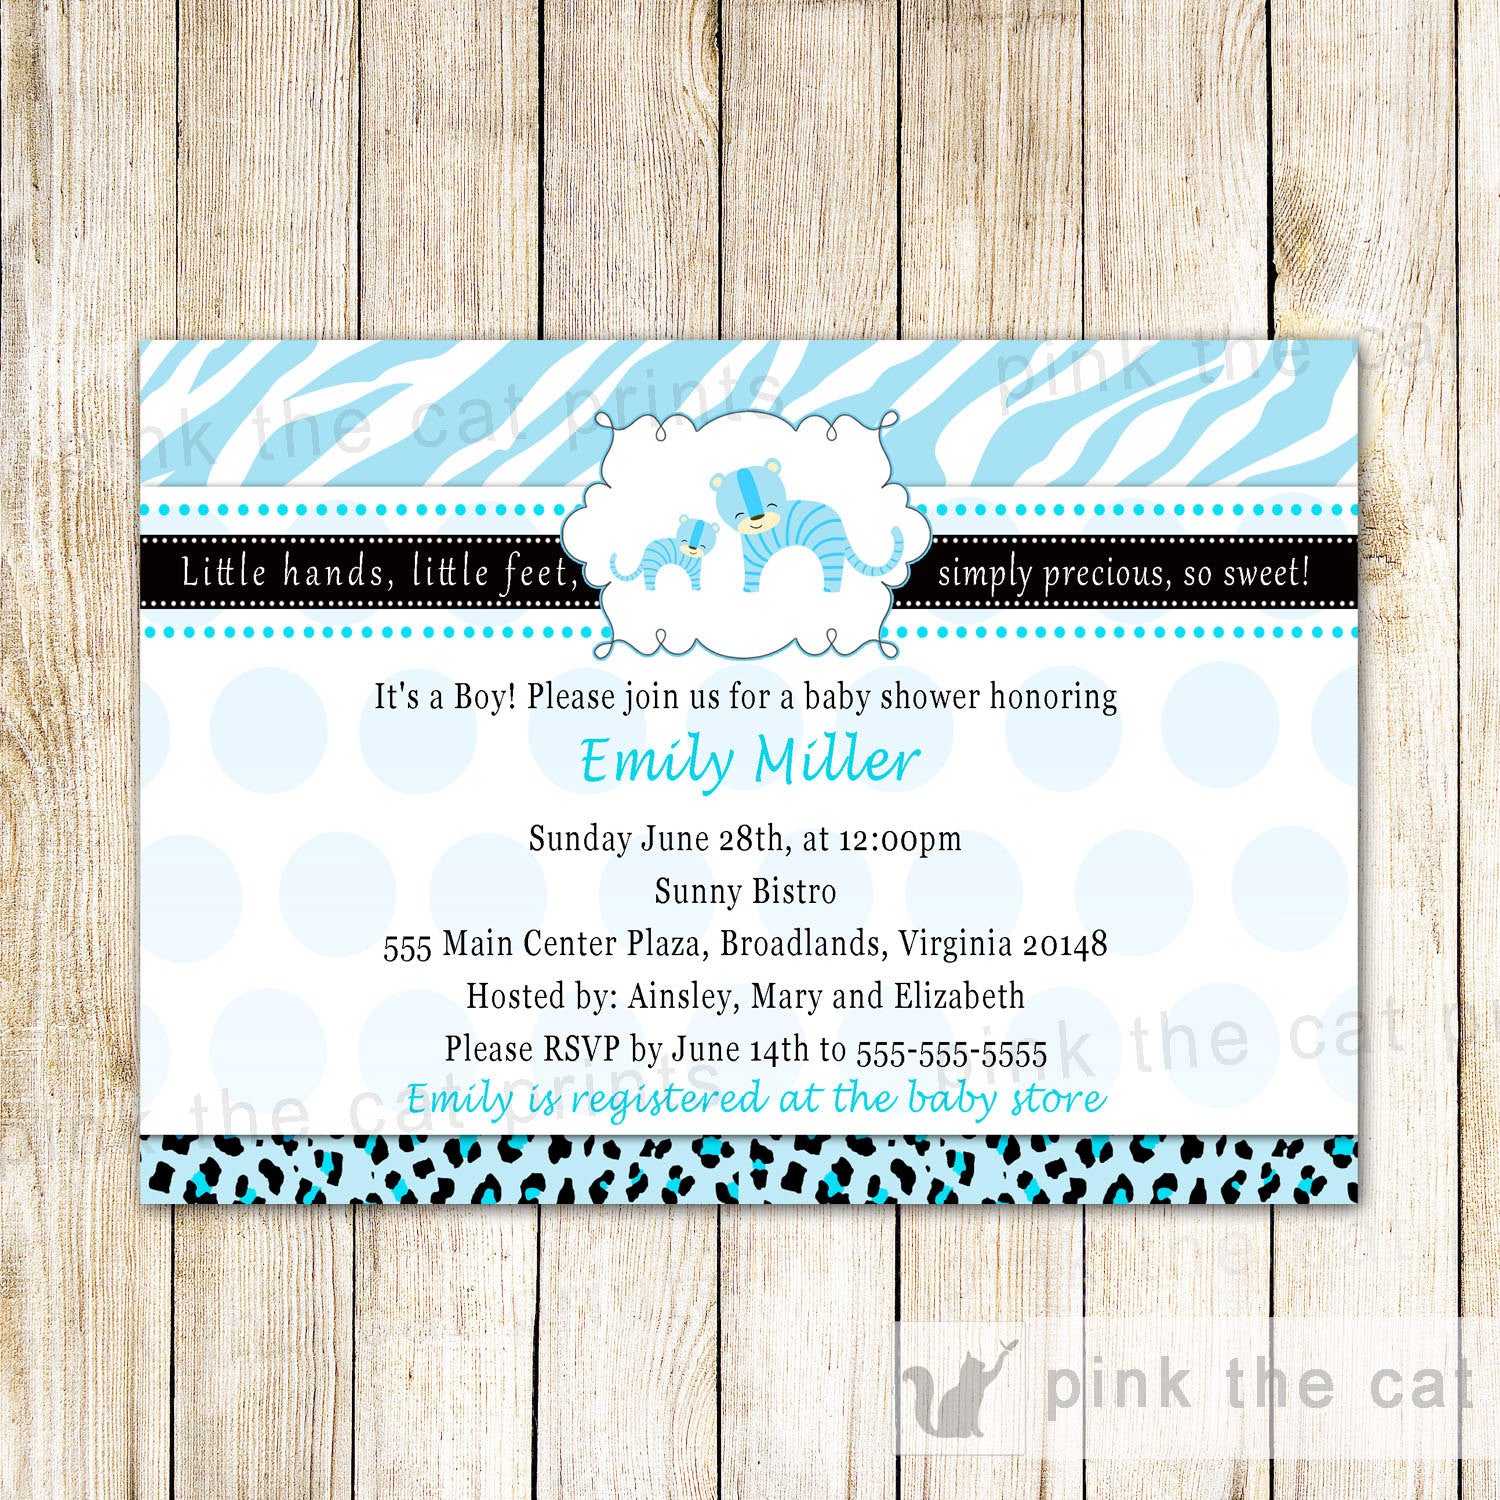 zebra princess baby shower invitations